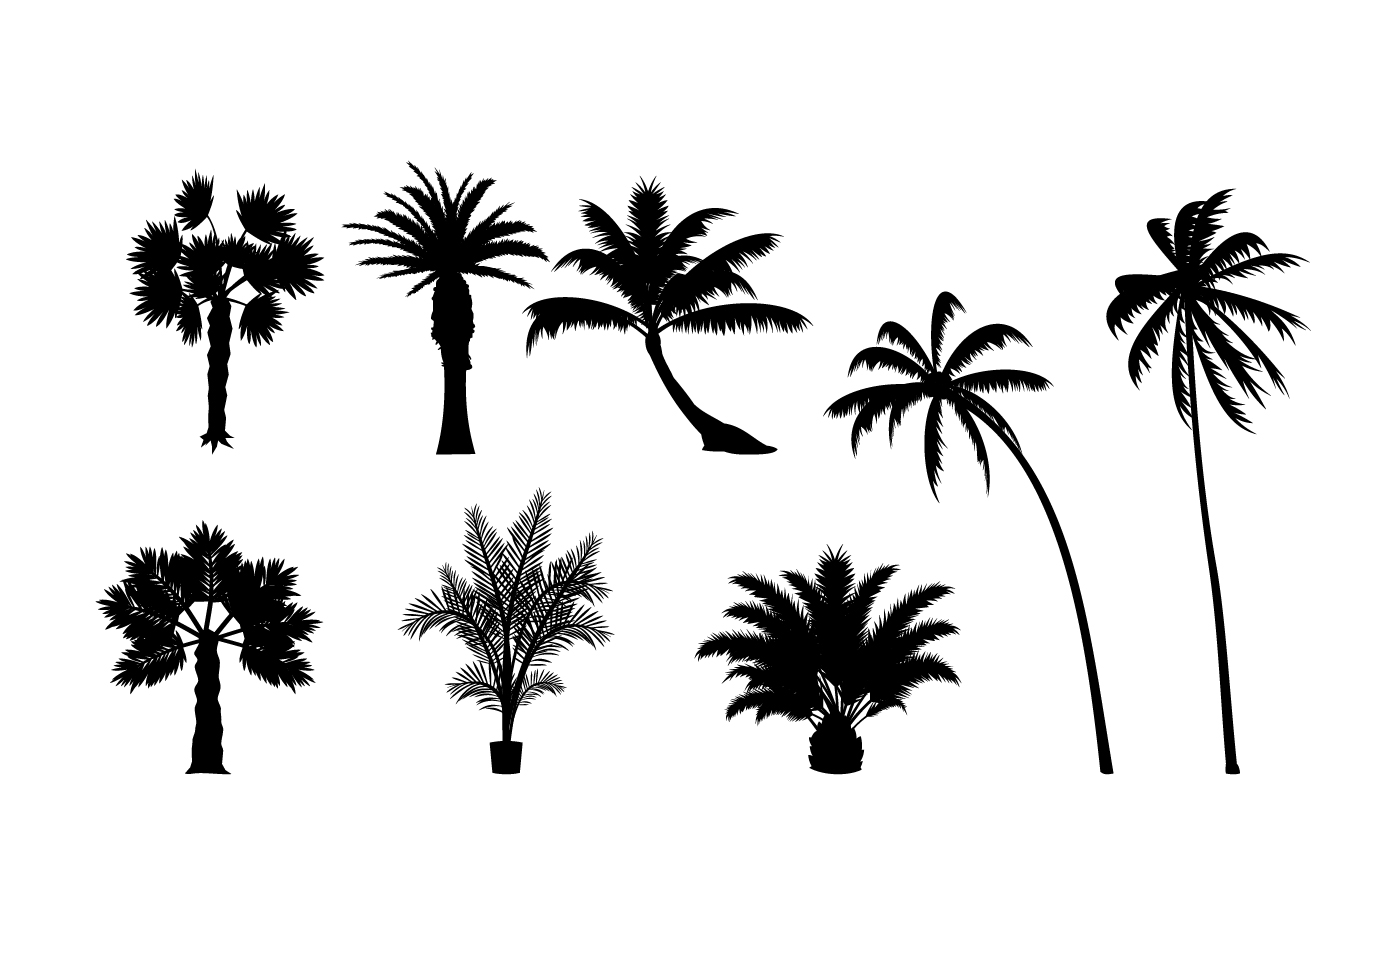 Palm Tree Silhouette Free Vector Art. 